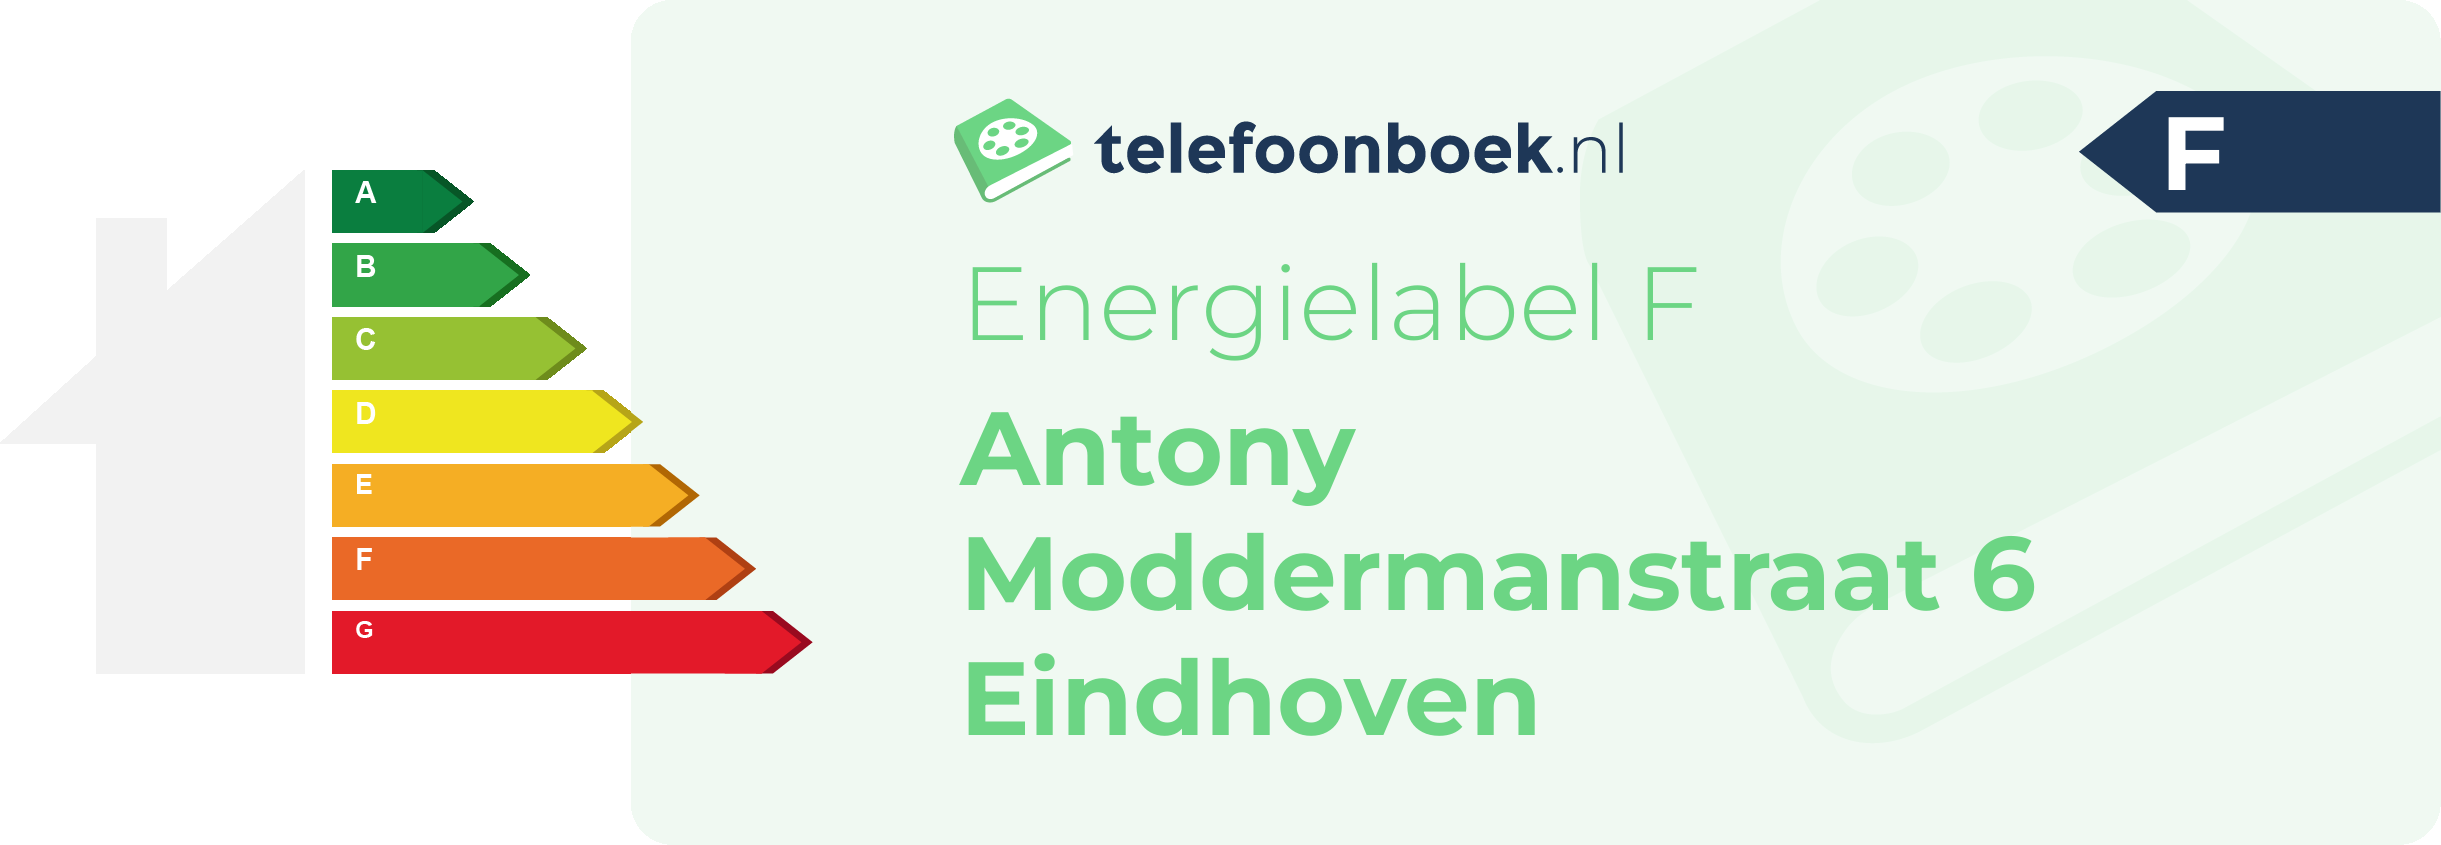 Energielabel Antony Moddermanstraat 6 Eindhoven